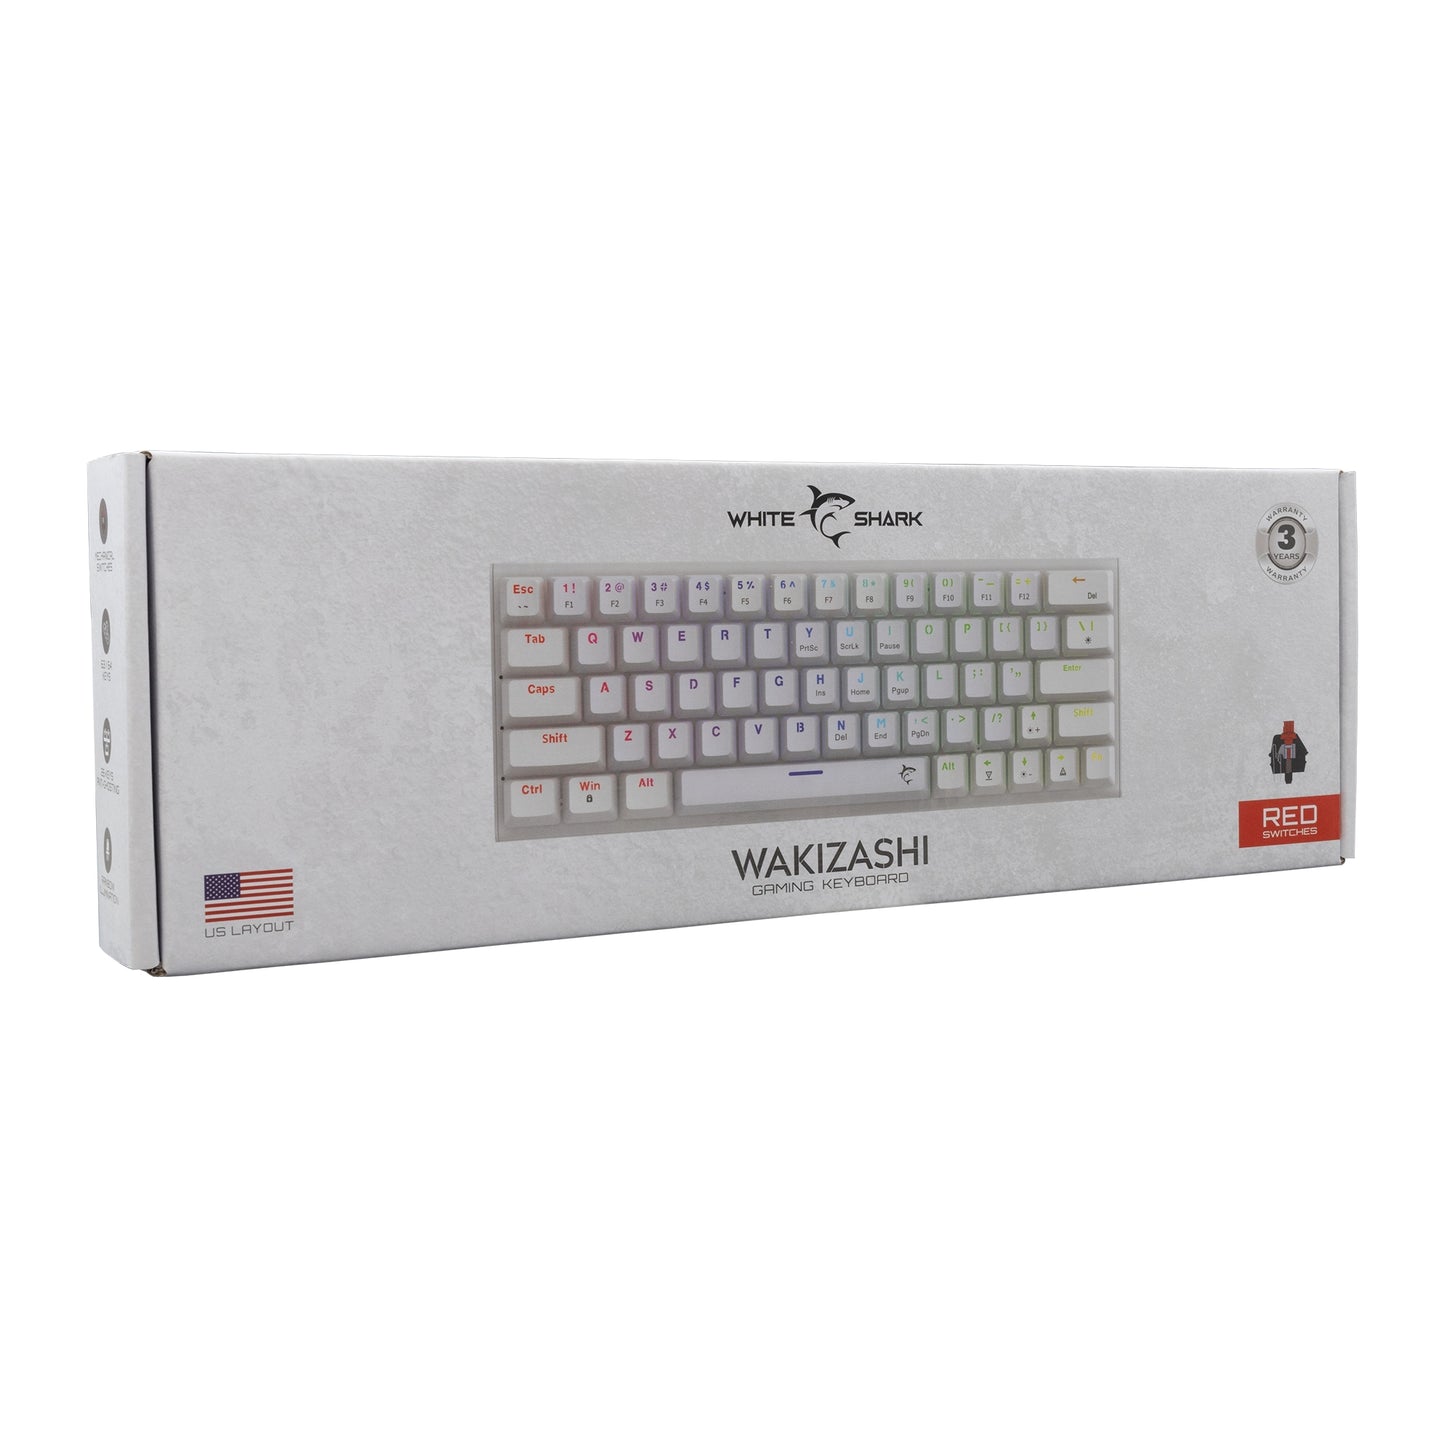 Klaviatūra balta ar Red Switches. White Shark GK-002211 Wakizashi